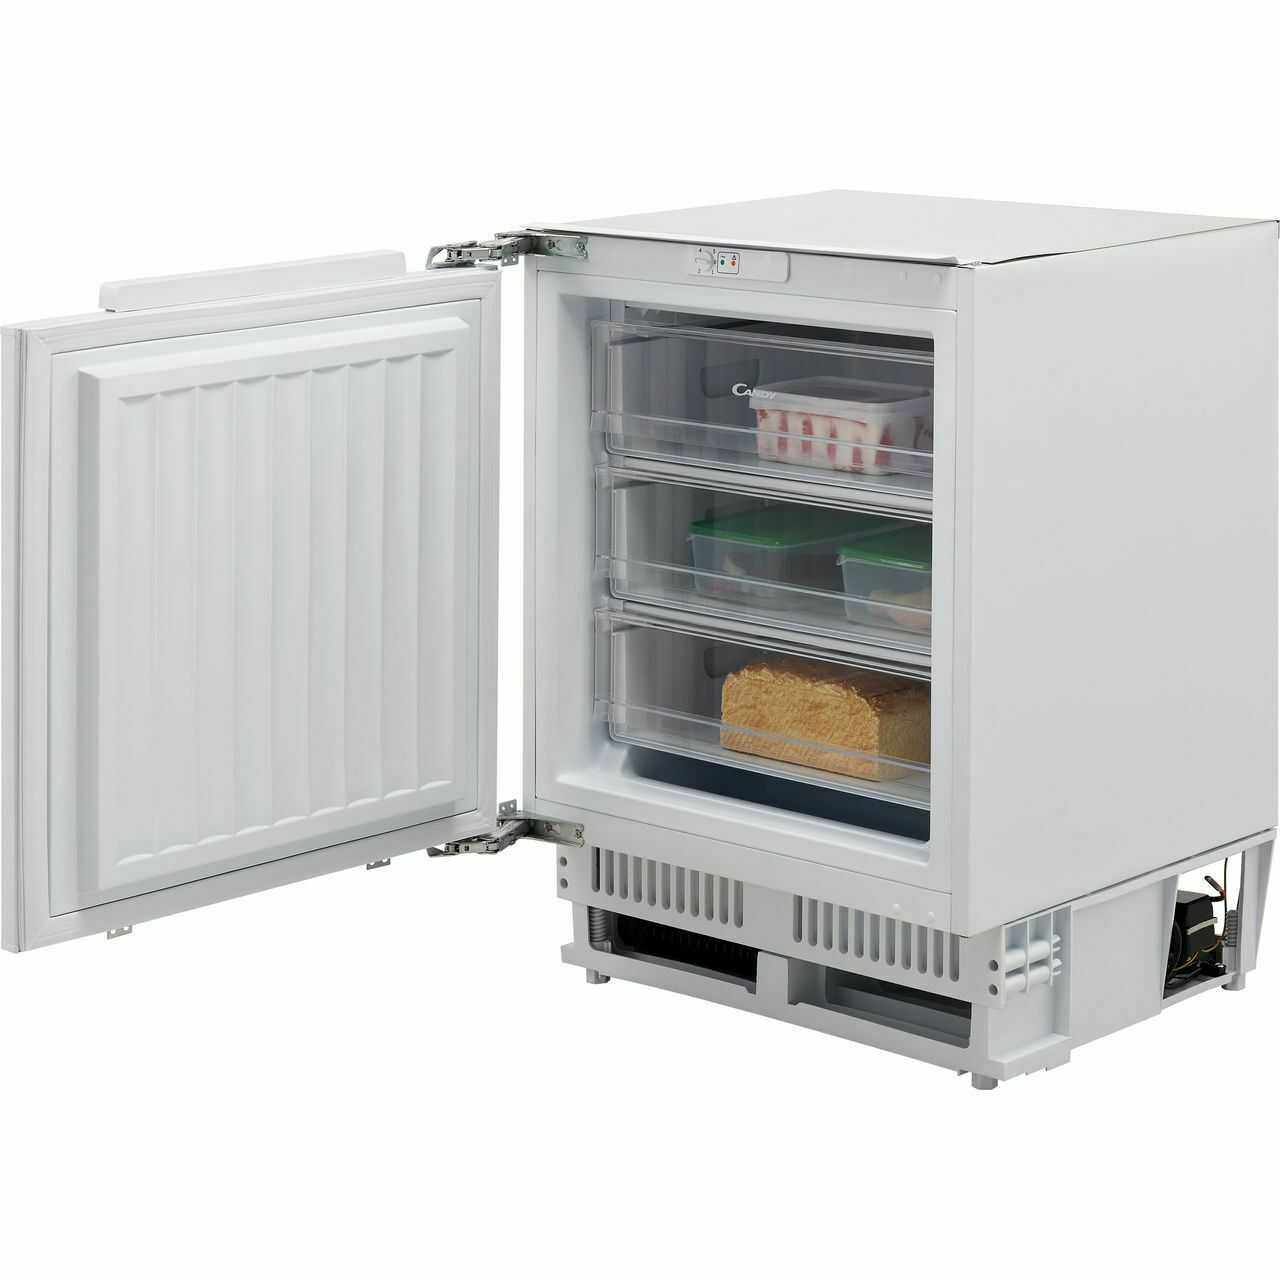 Candy CFU 135 NEK/N Integrated Under Counter Freezer White 0390